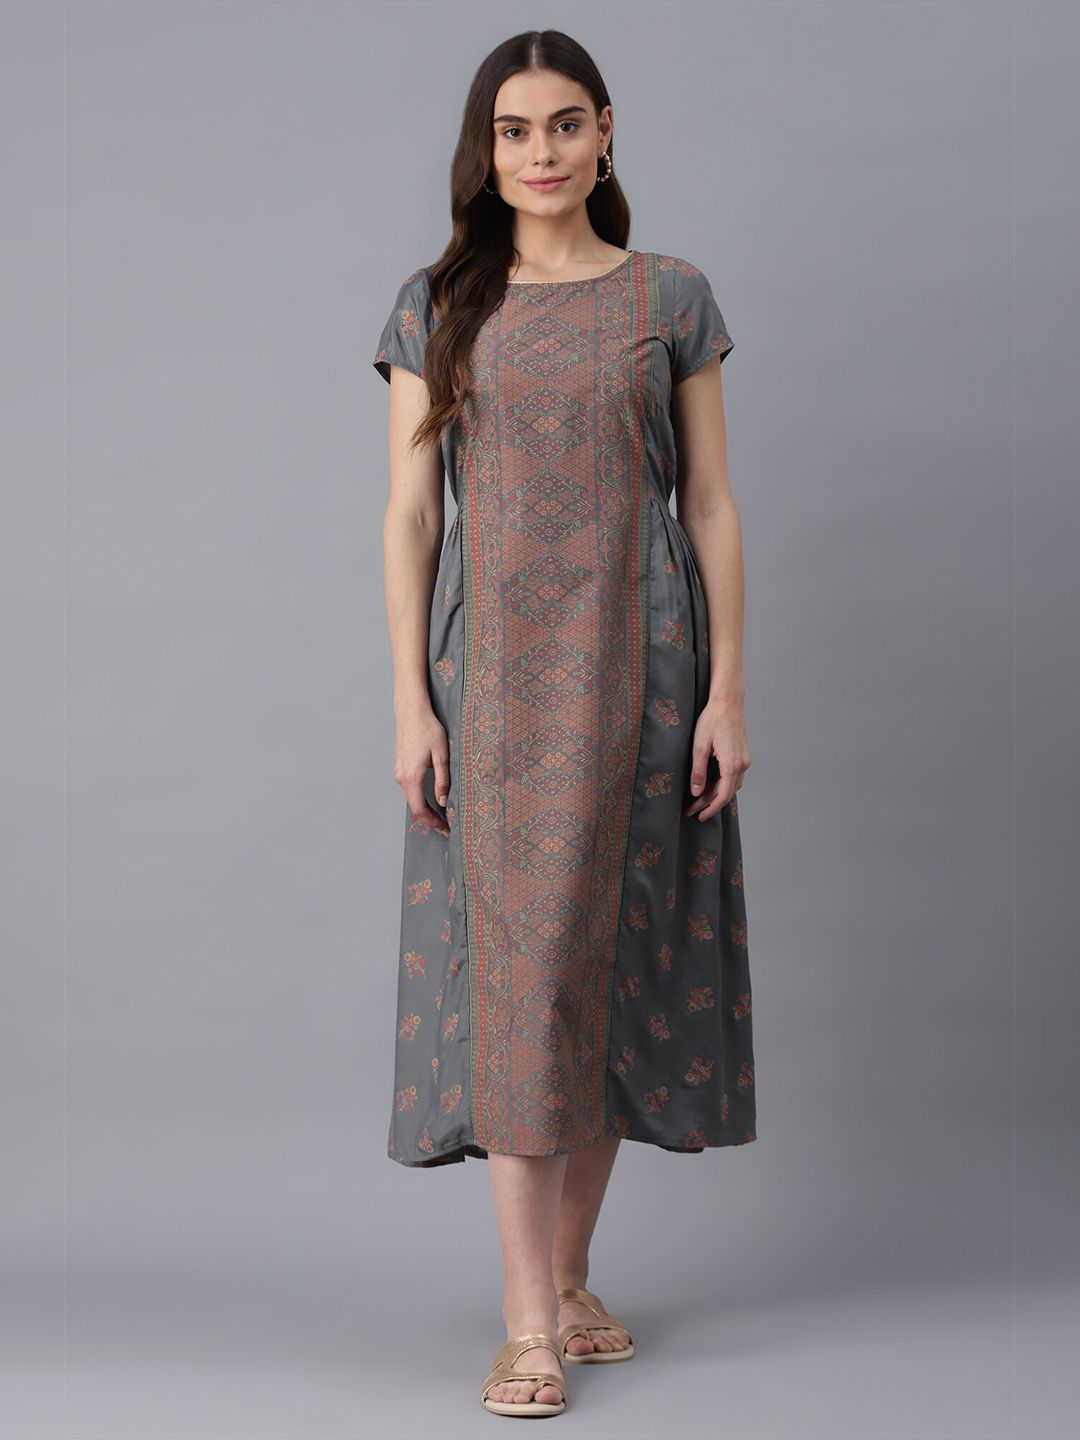 AURELIA Grey Floral Ethnic A-Line Midi Dress Price in India